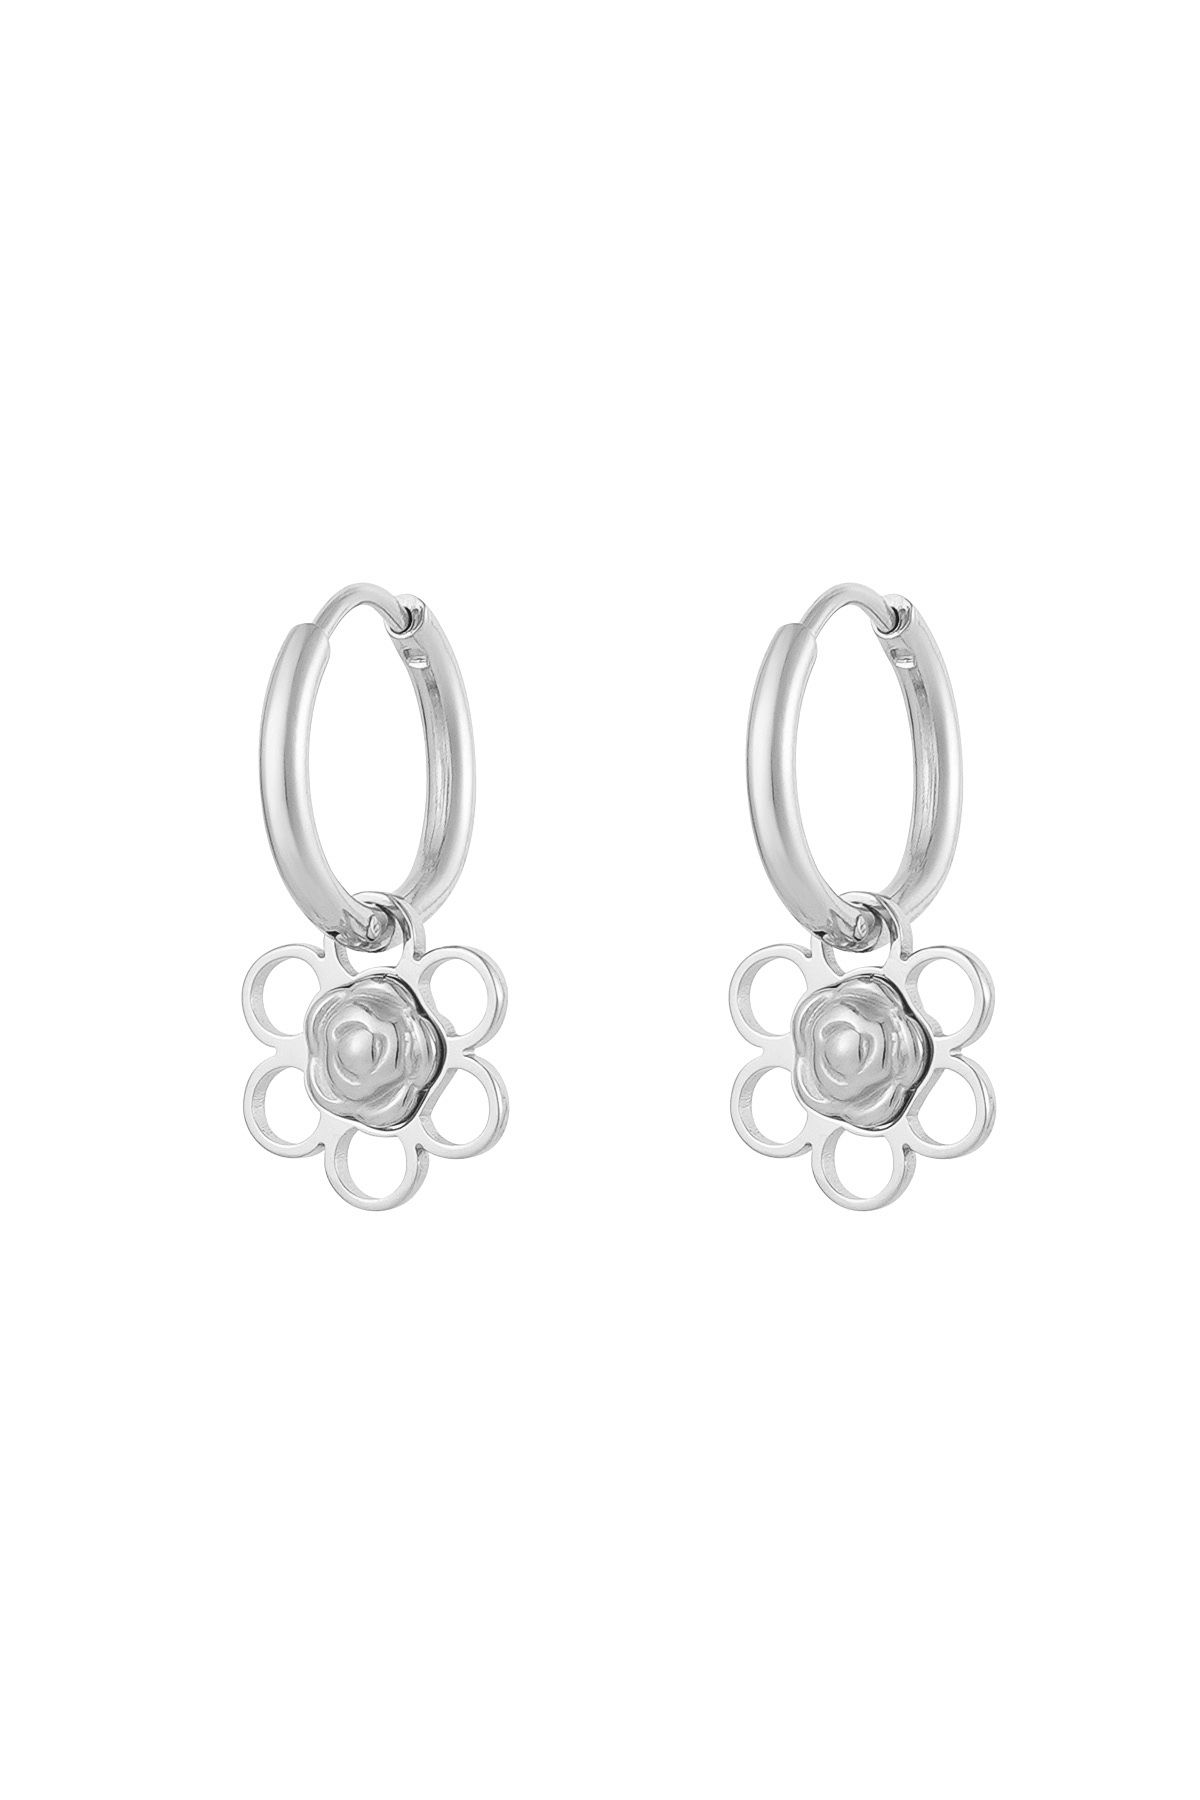 Ohrringe mit Blumen-/Rosenanhänger – Silber